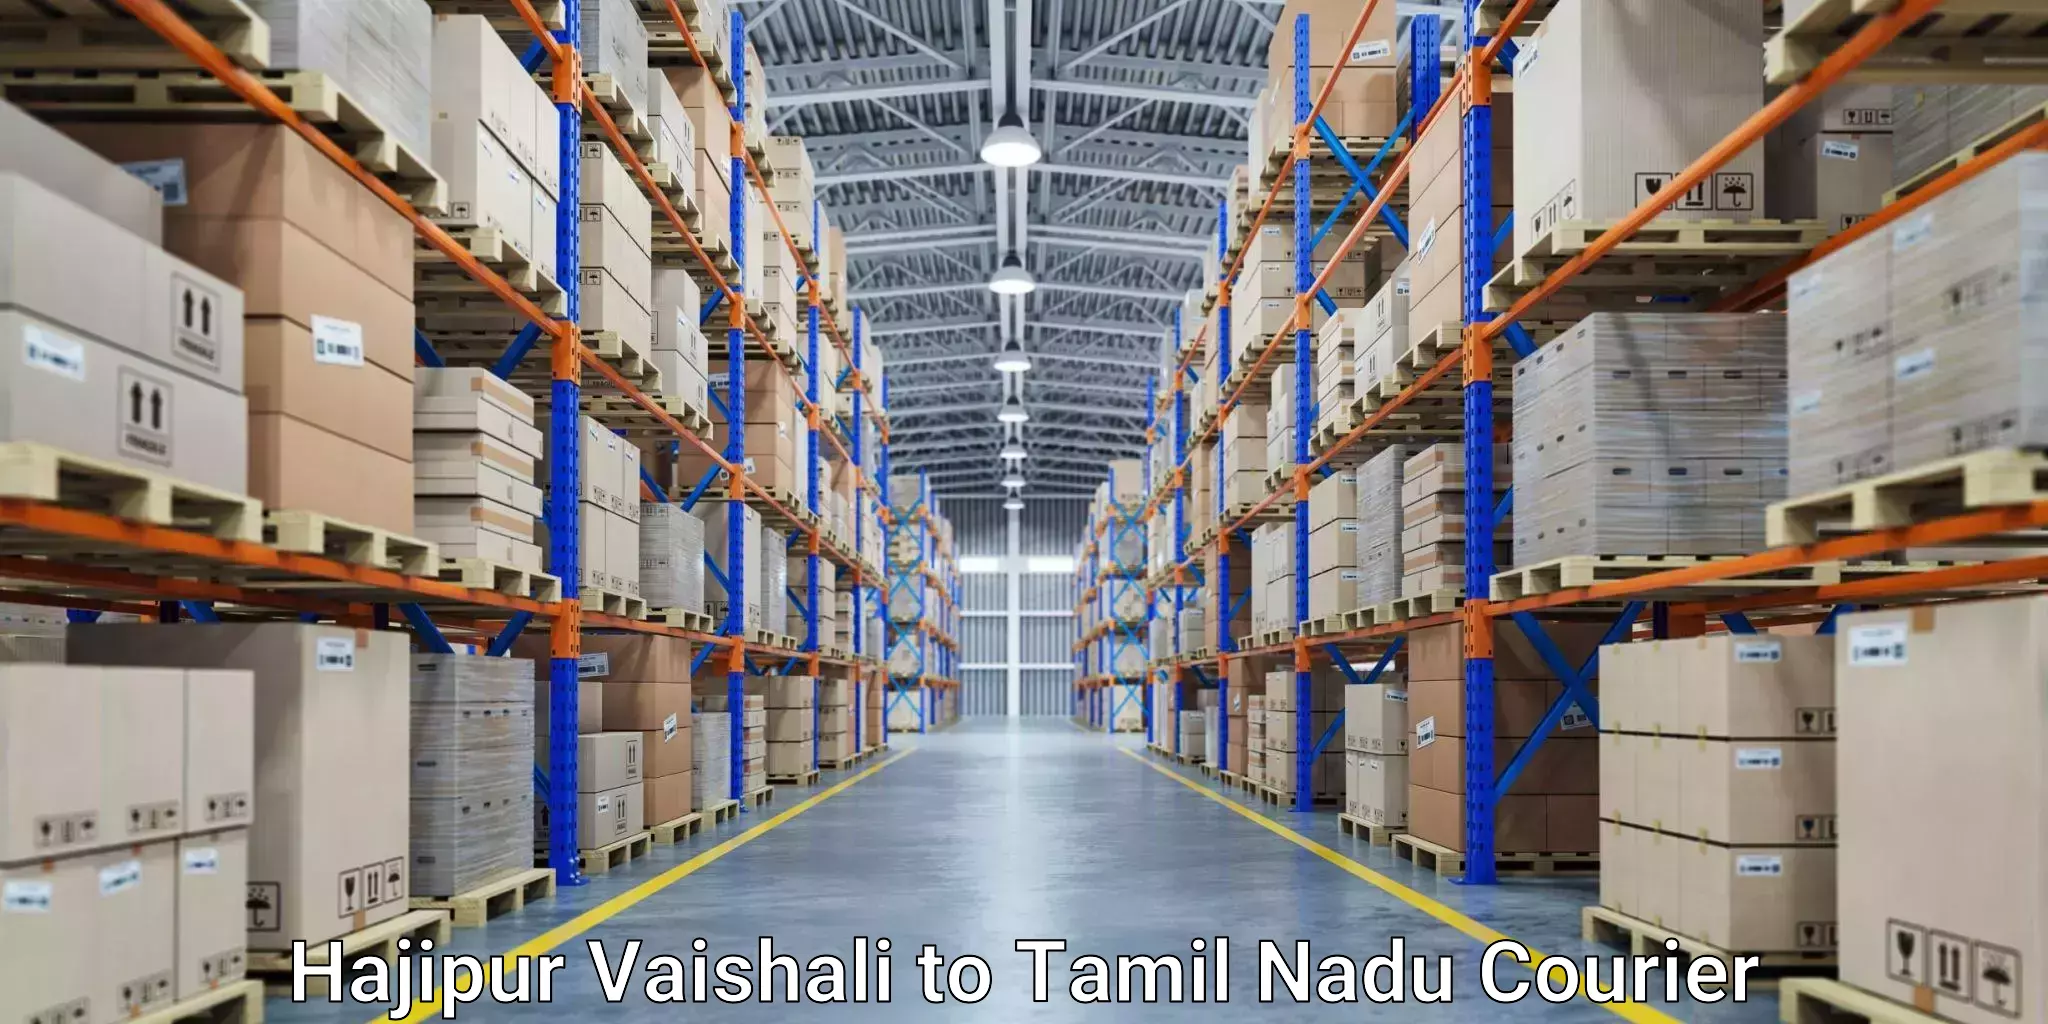 Express delivery solutions Hajipur Vaishali to Gummidipoondi